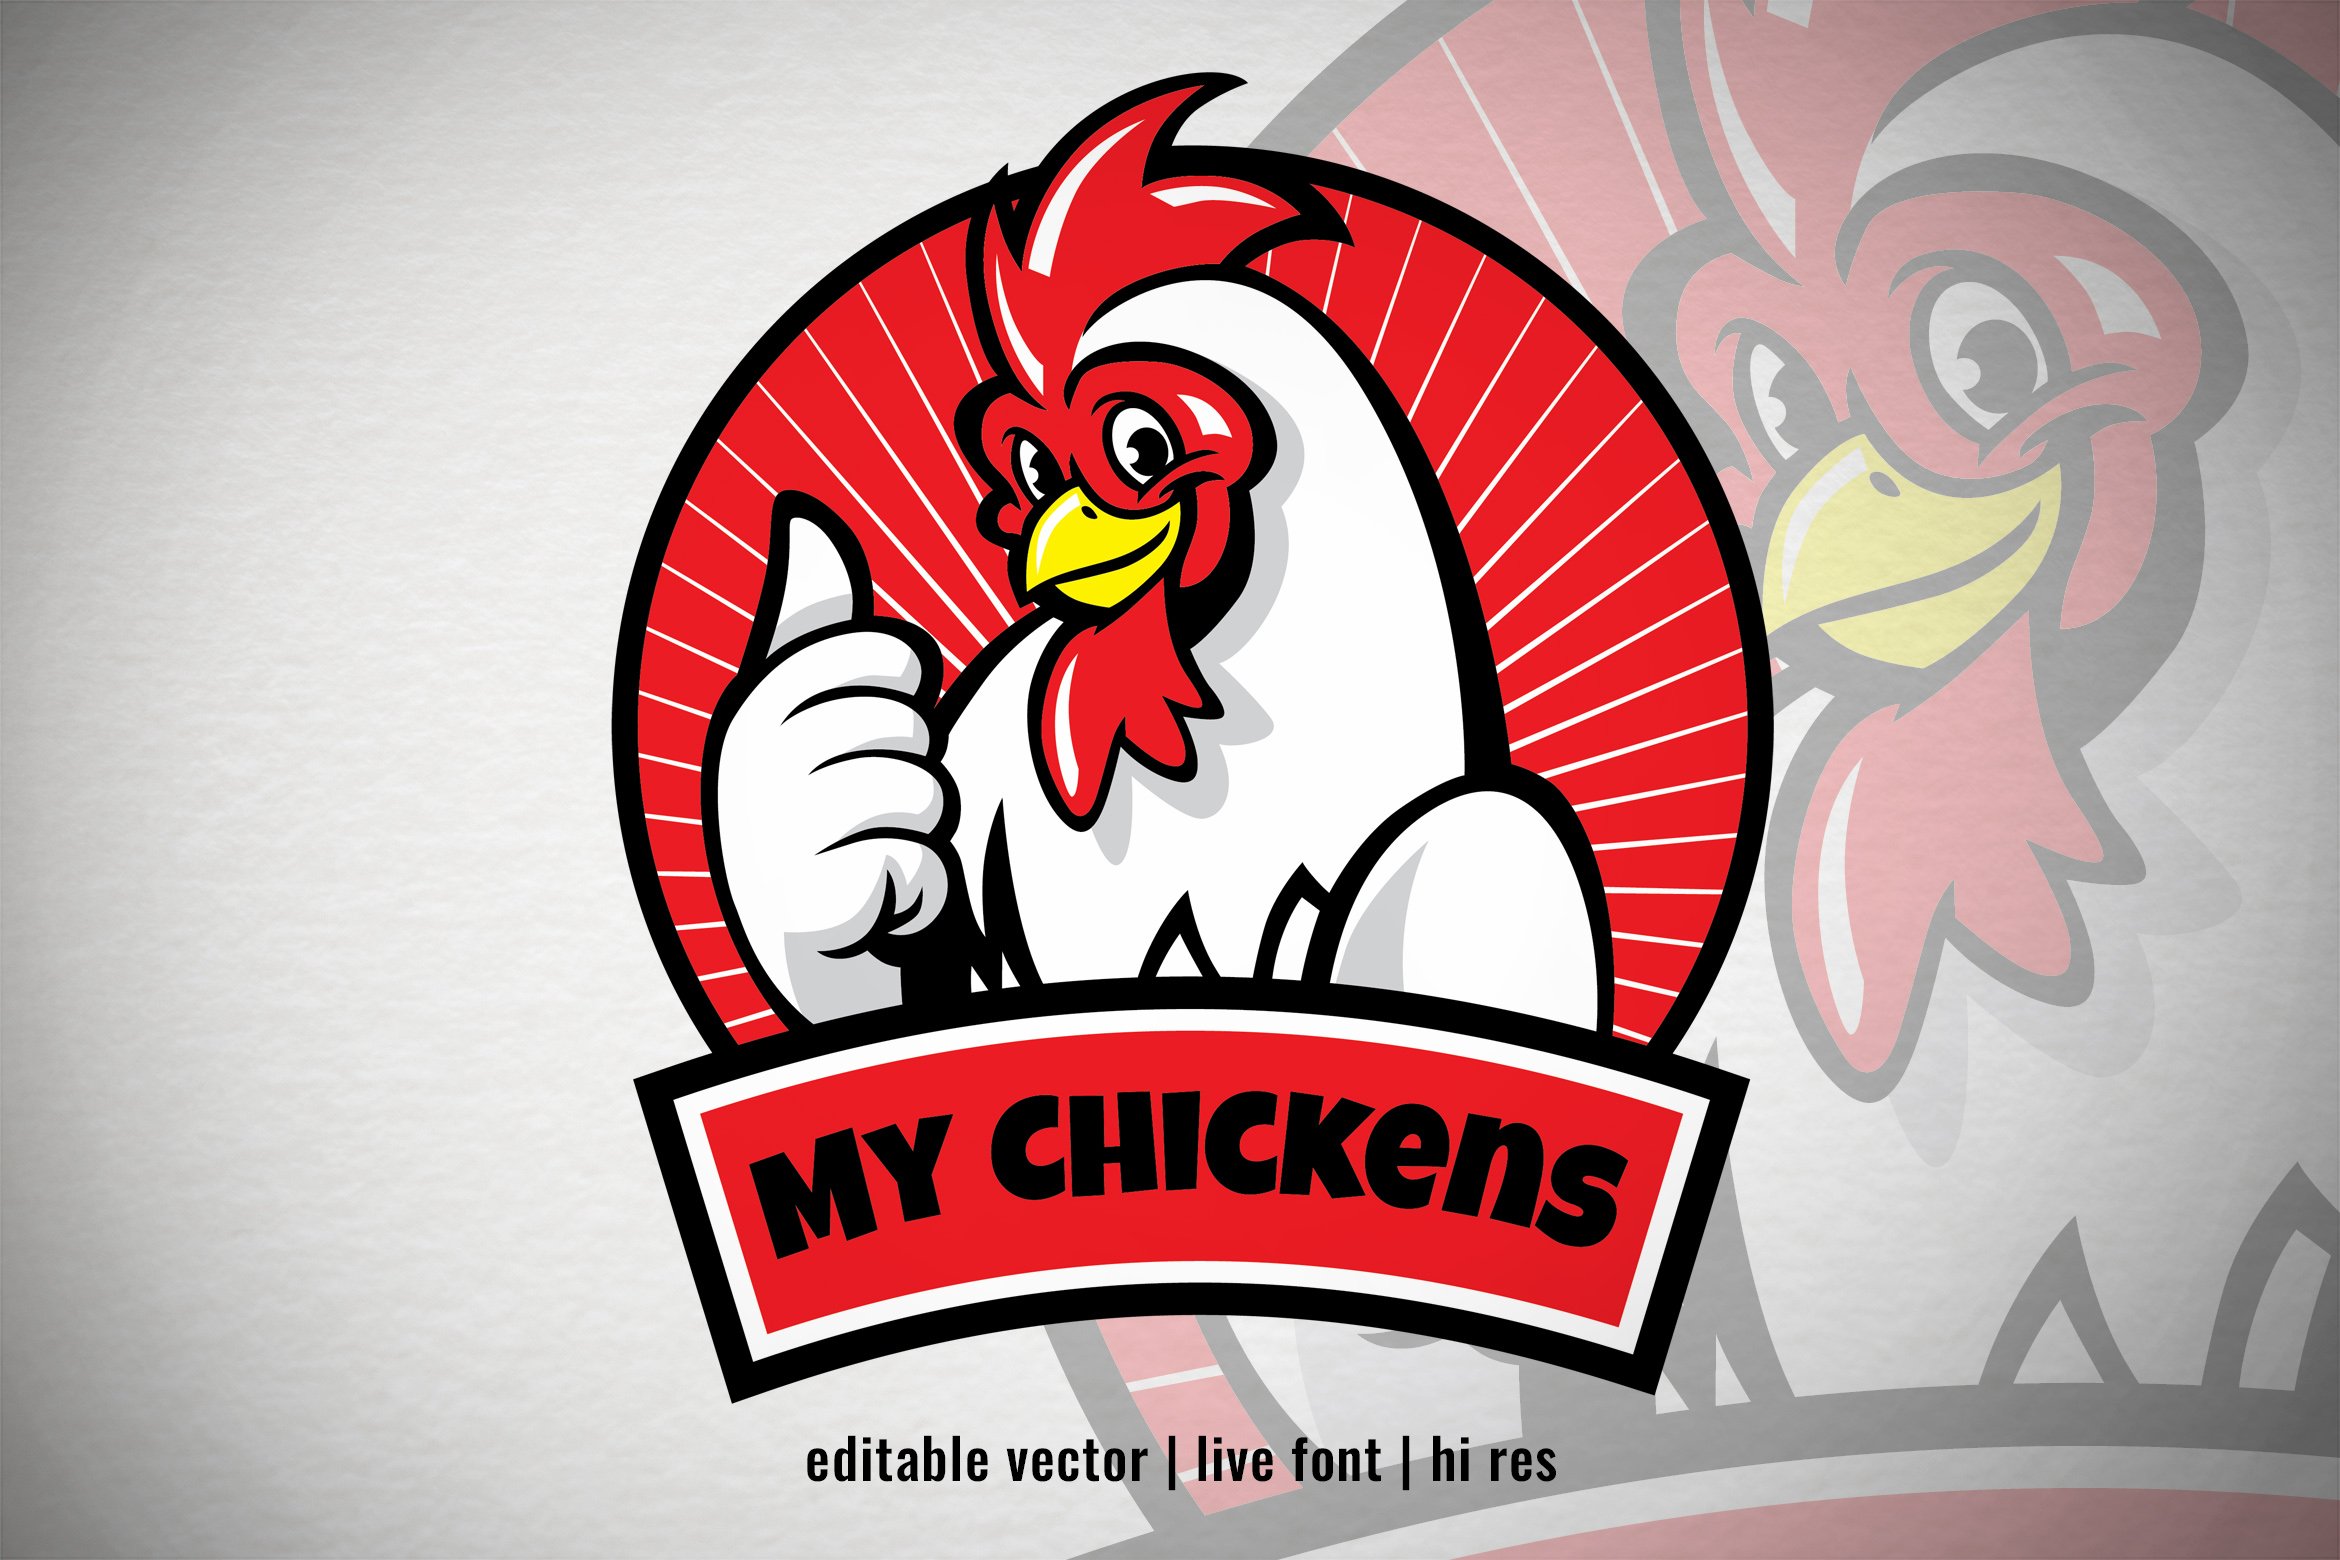 Cartoon Chicken Mascot Logo Thumb Up cover image.